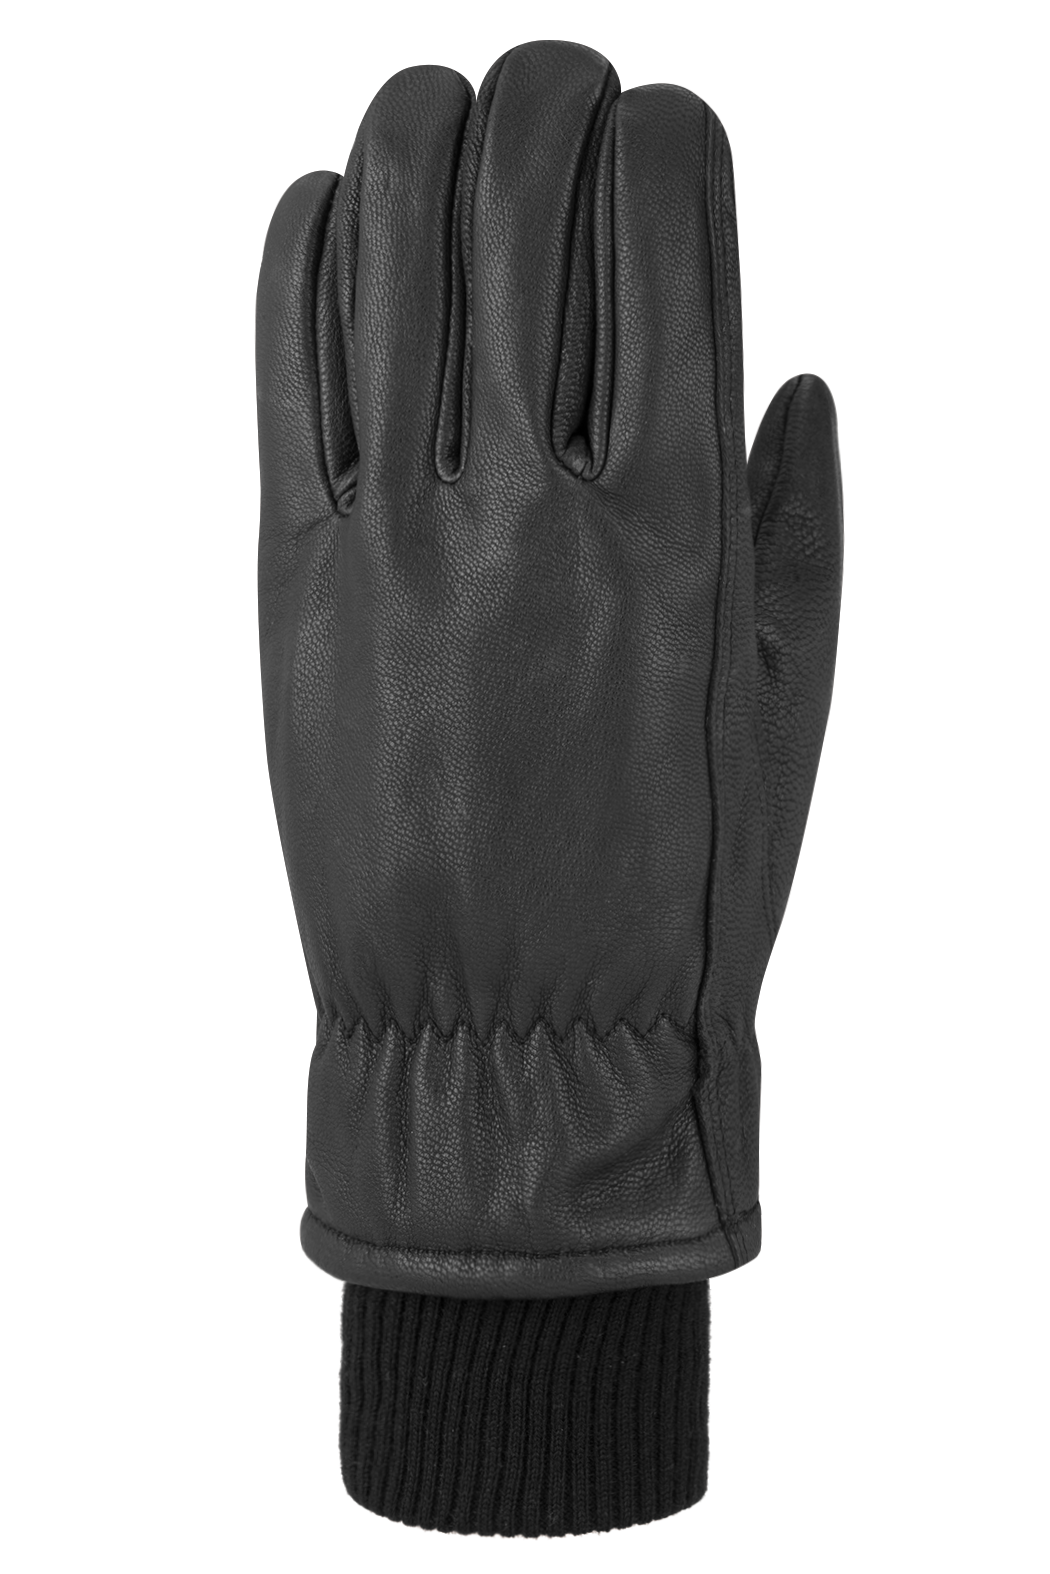 Colton Gloves - Men-Glove-Auclair-L-BLACK-Auclair Sports